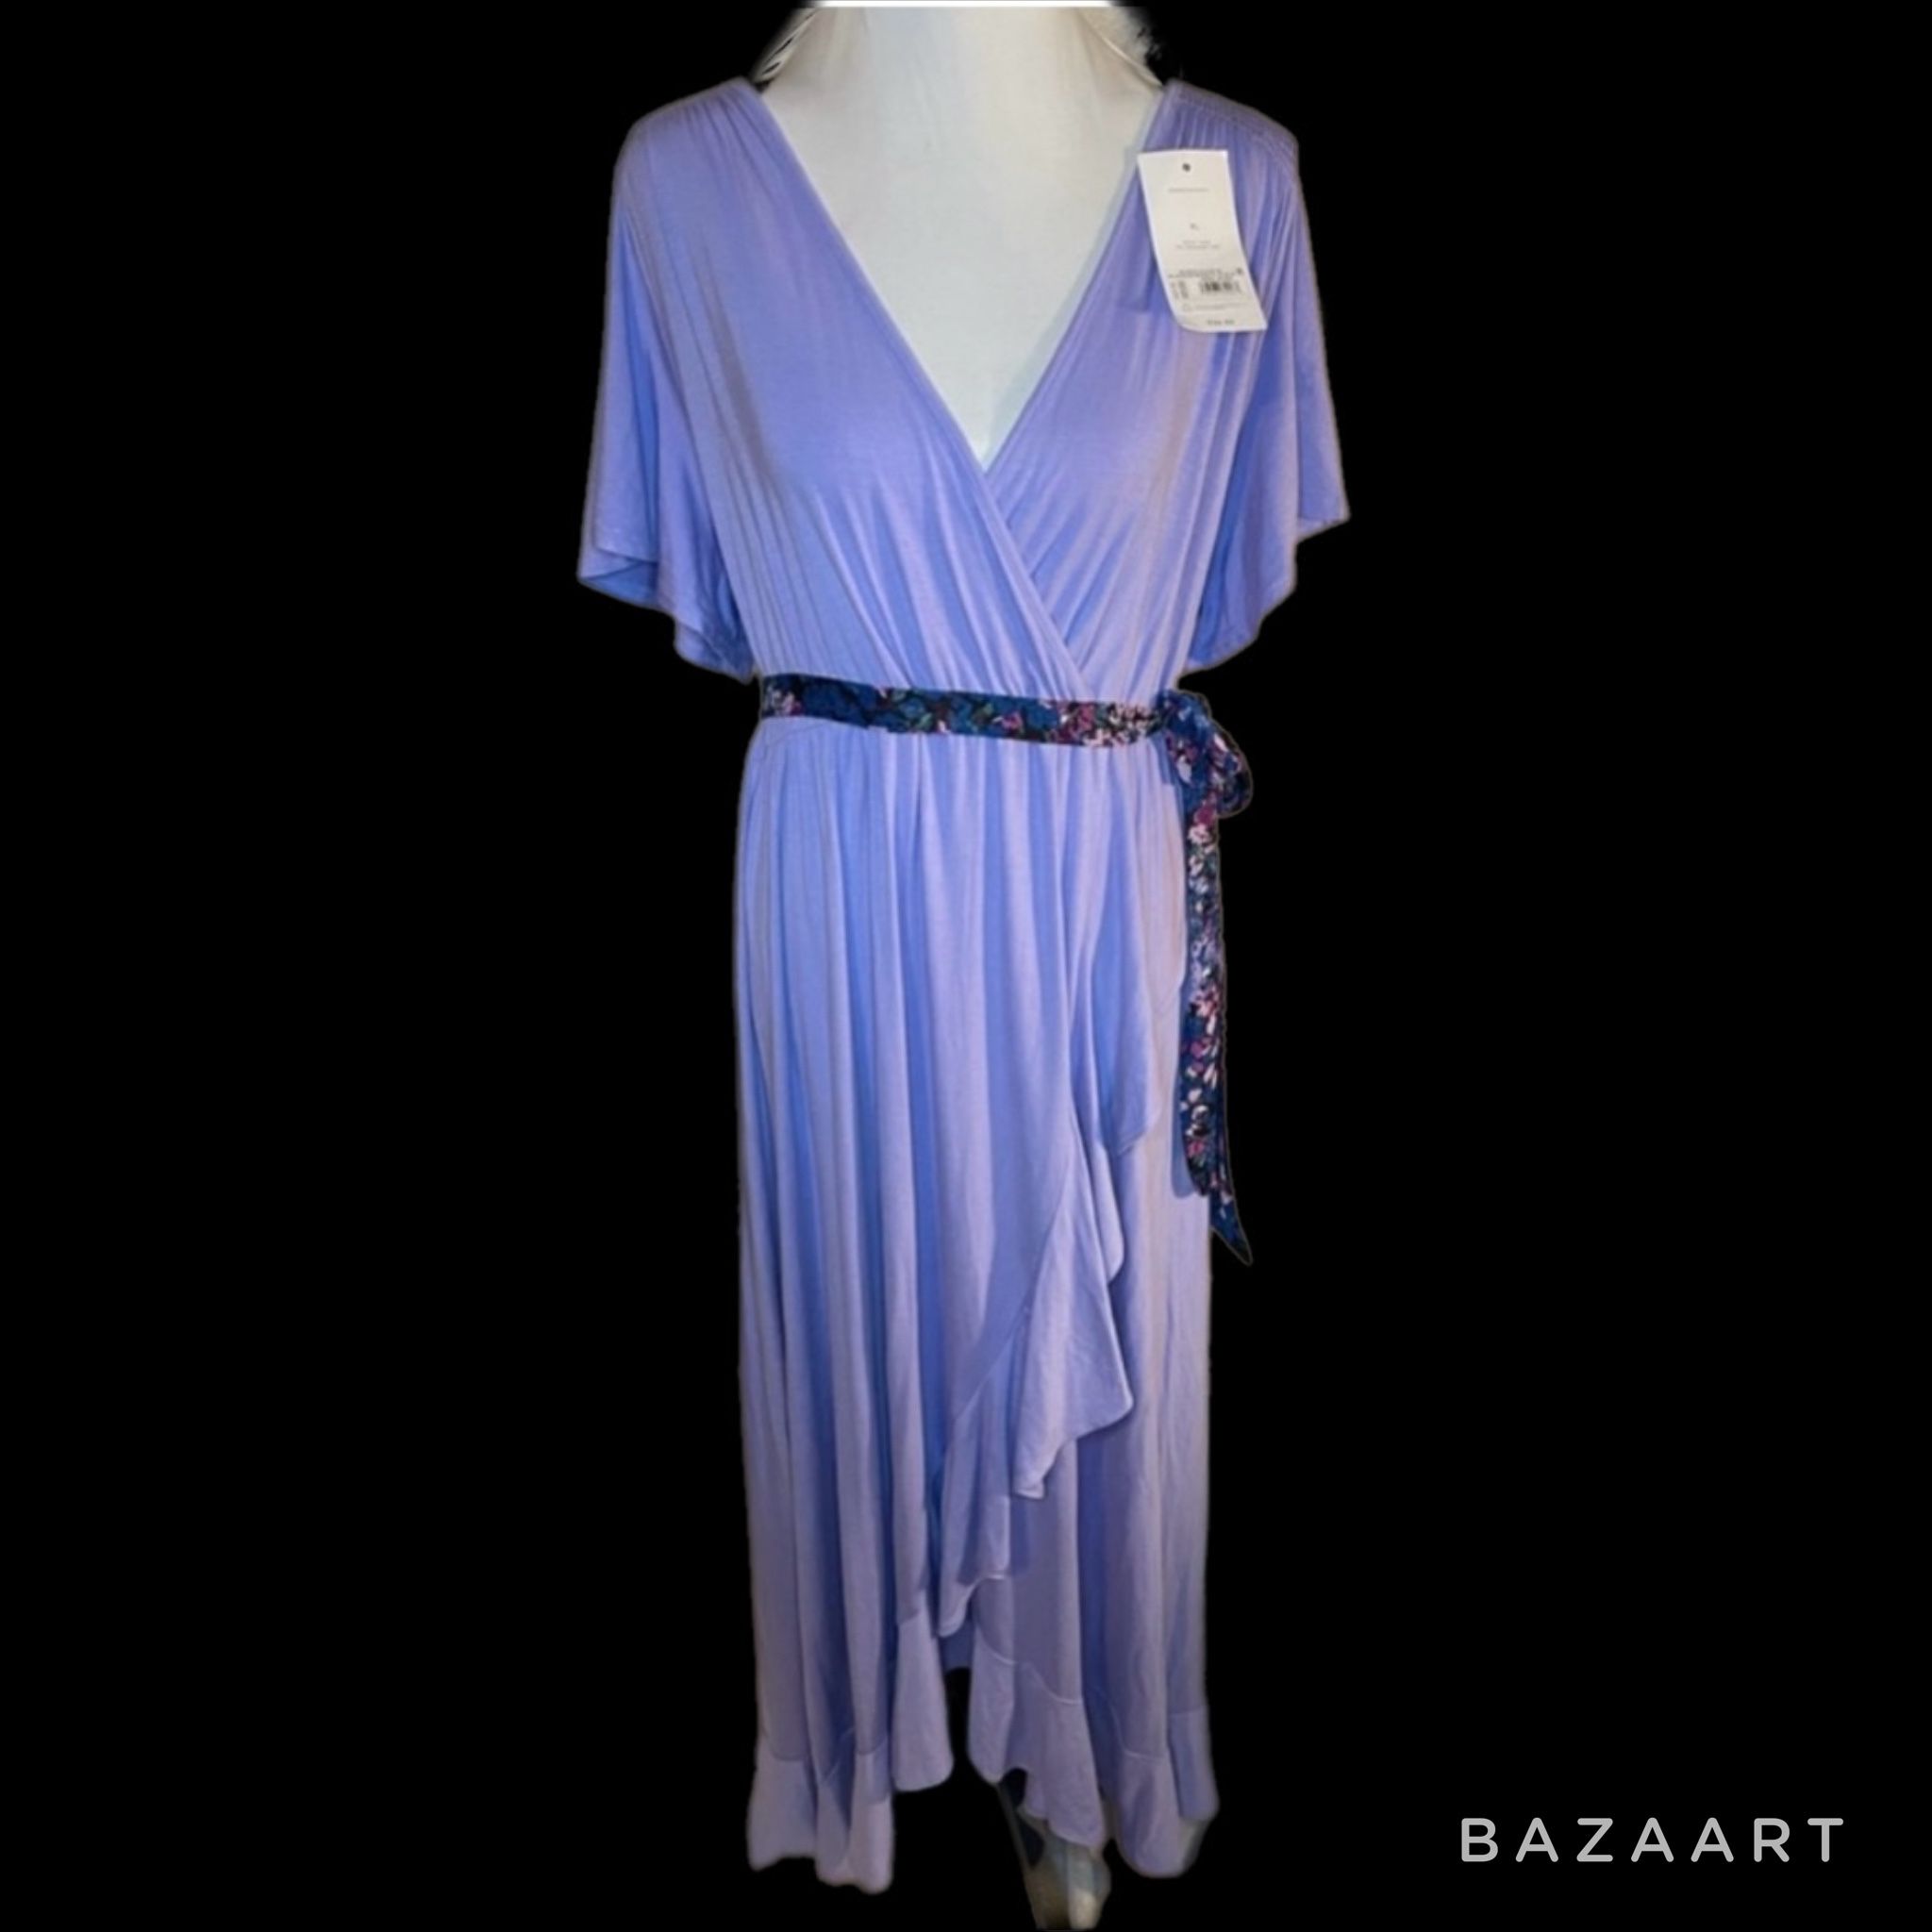 Sz XL INGRID & ISABEL NWT purple belted wrap dress Isabel maternity